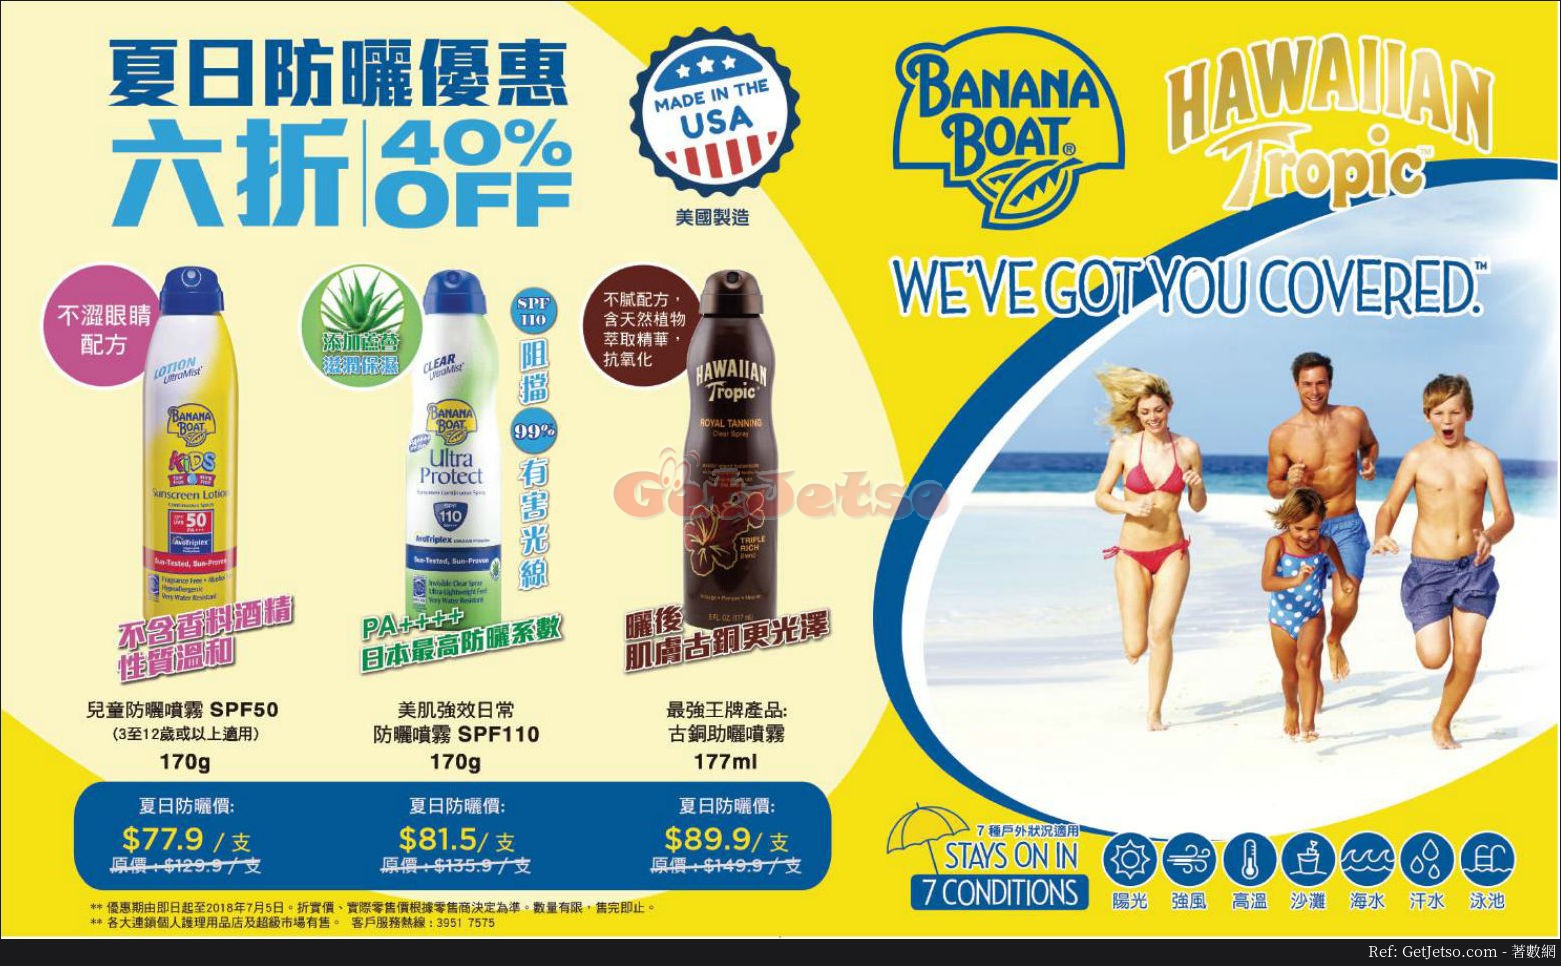 Hawaiian tropic 夏日防曬產品6折減價(至18年7月5日)圖片1